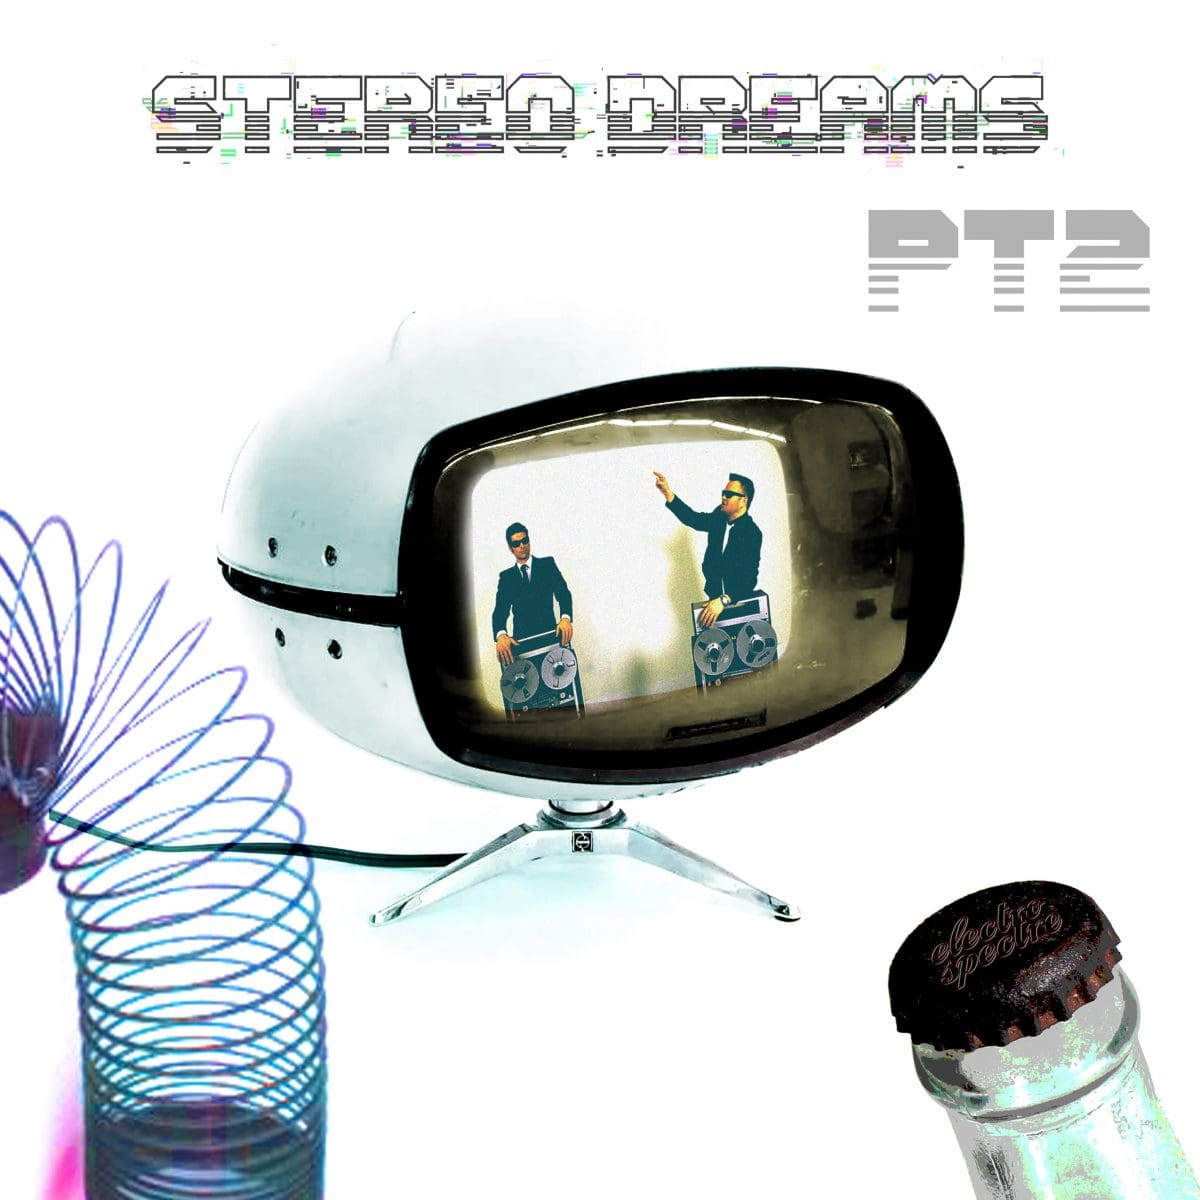 Electro Spectre - Stereo Dreams Pt-2